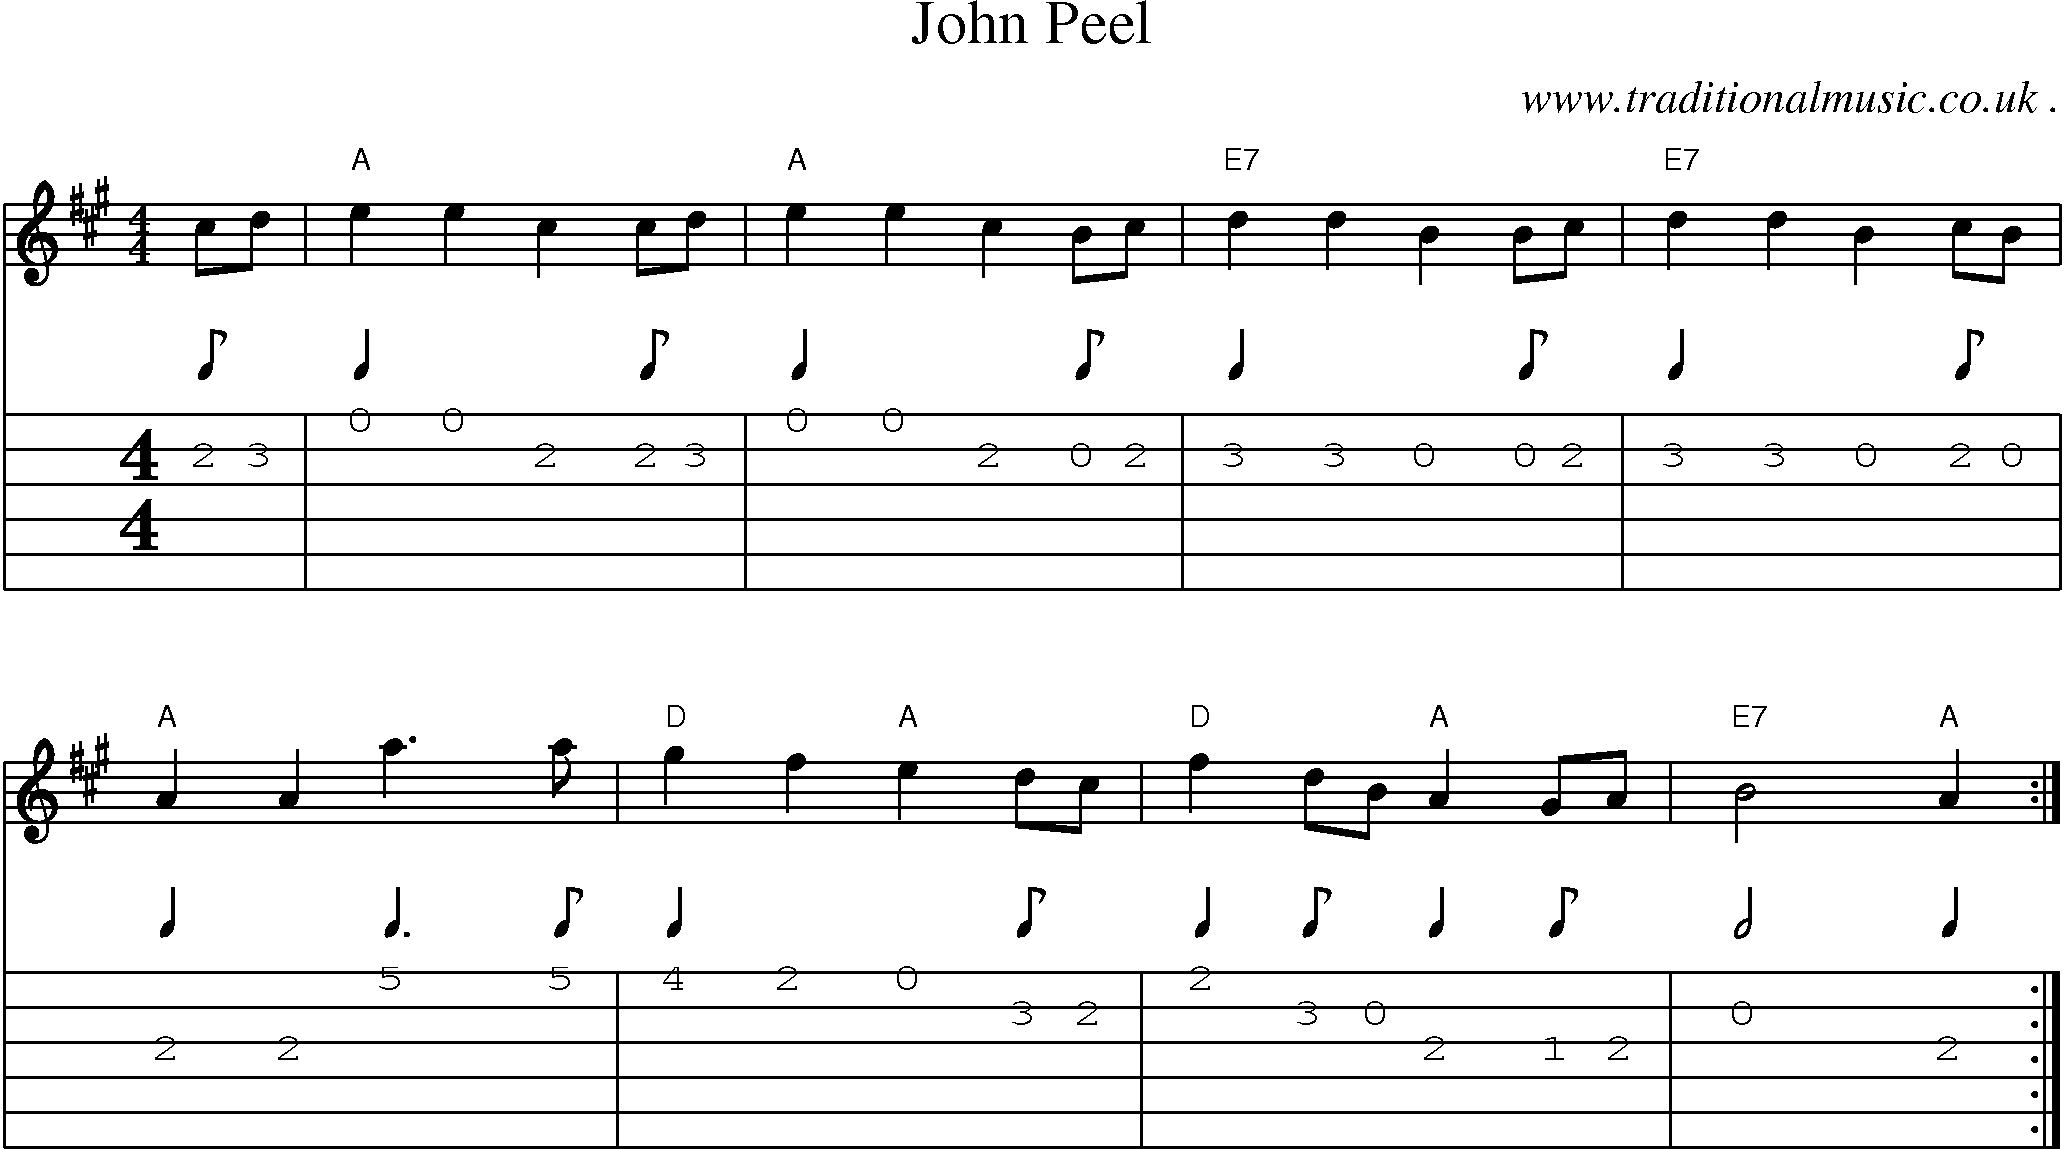 Sheet-Music and Guitar Tabs for John Peel